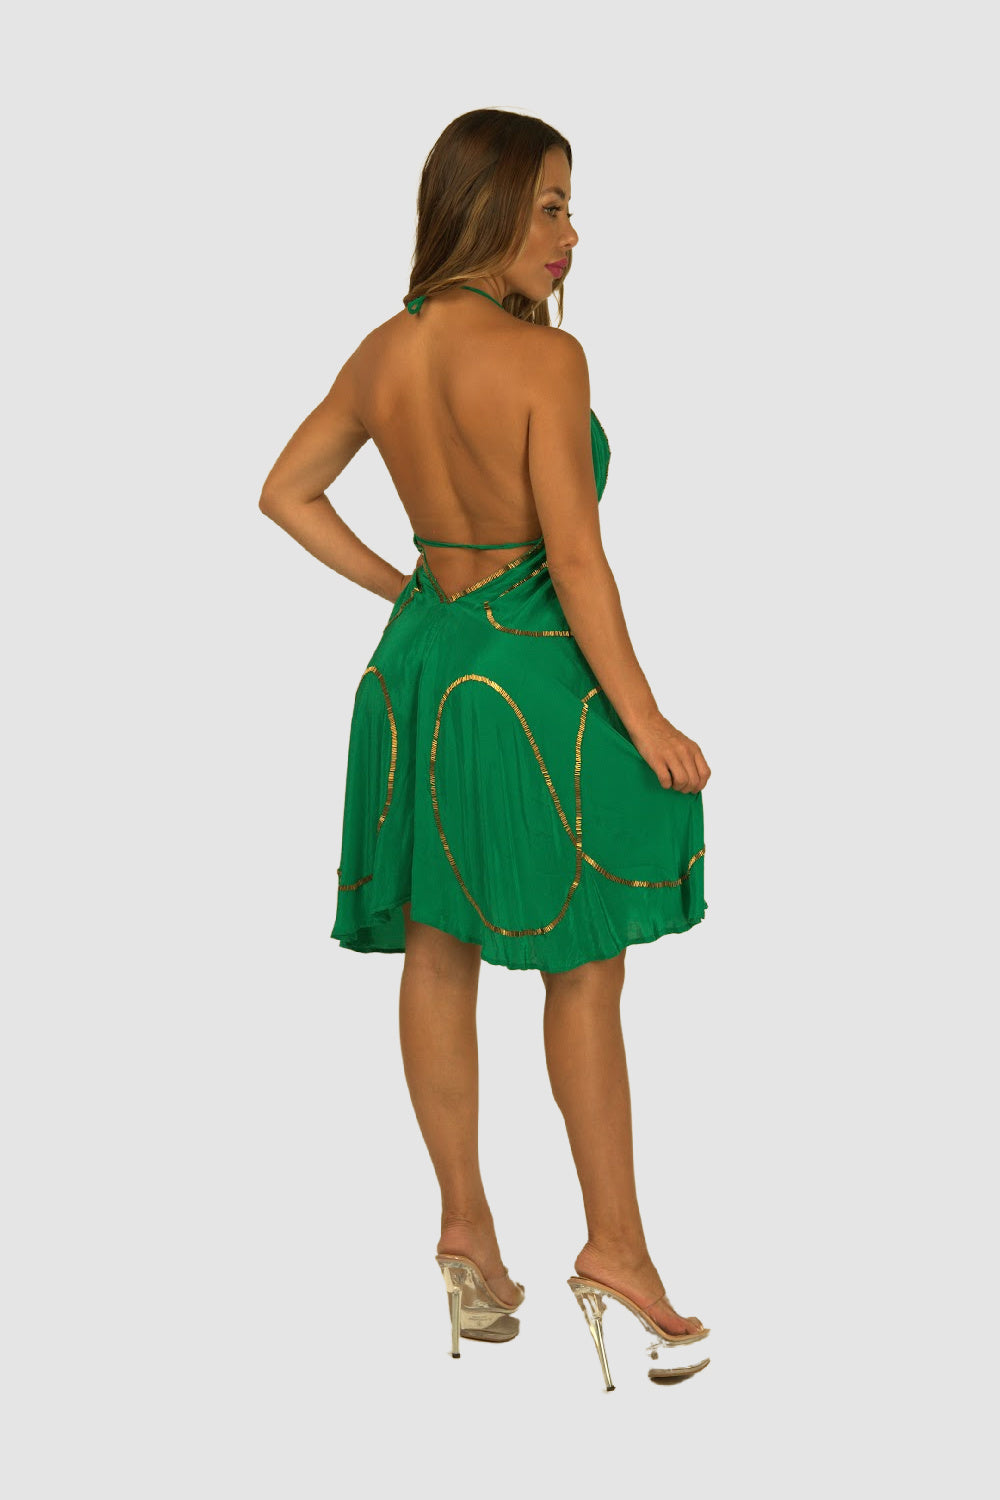 JSQUAD Emerald W Gold Dress